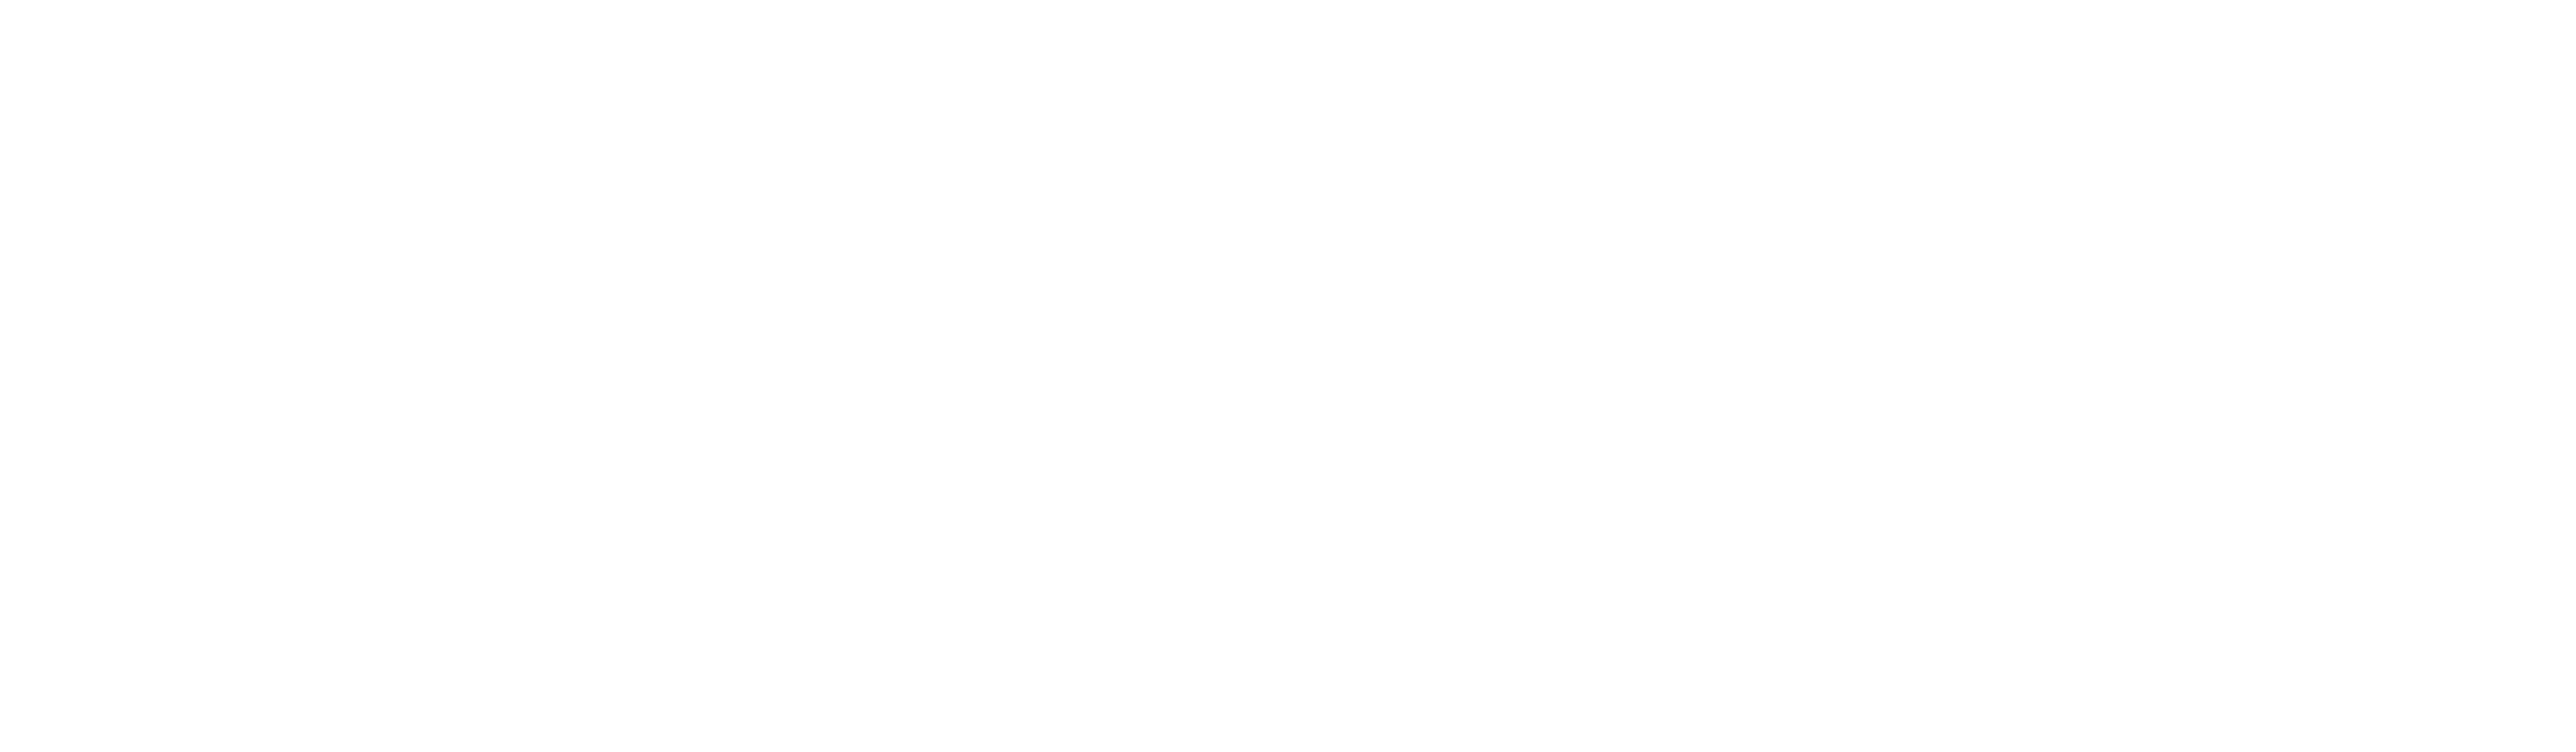 AlFozan Academy Training Platform